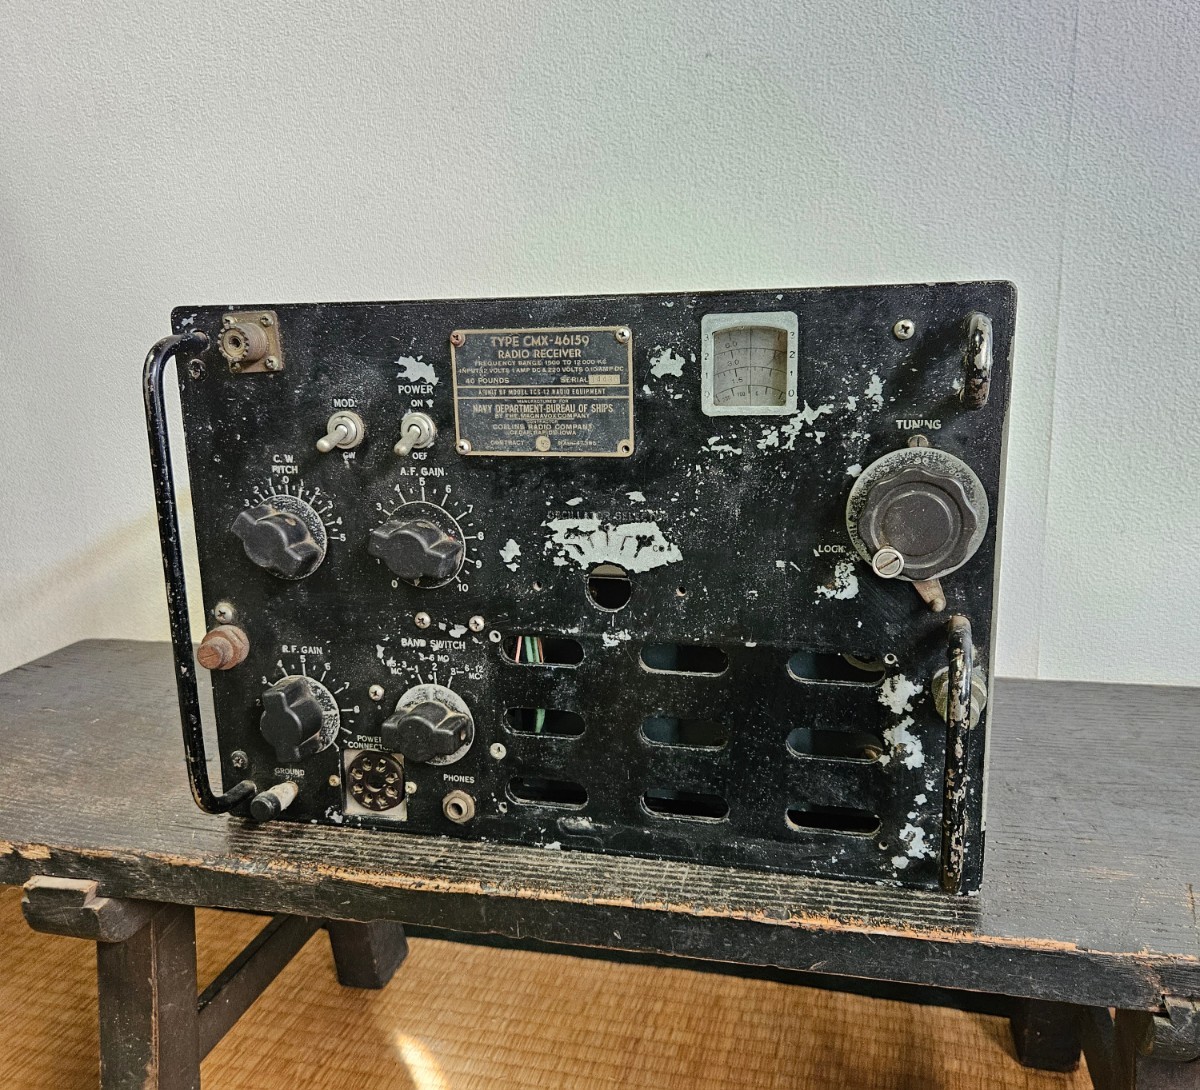 USA 軍用無線機 コリンズ HF受信機 CMX-46159 米軍 ラジオレシーバー